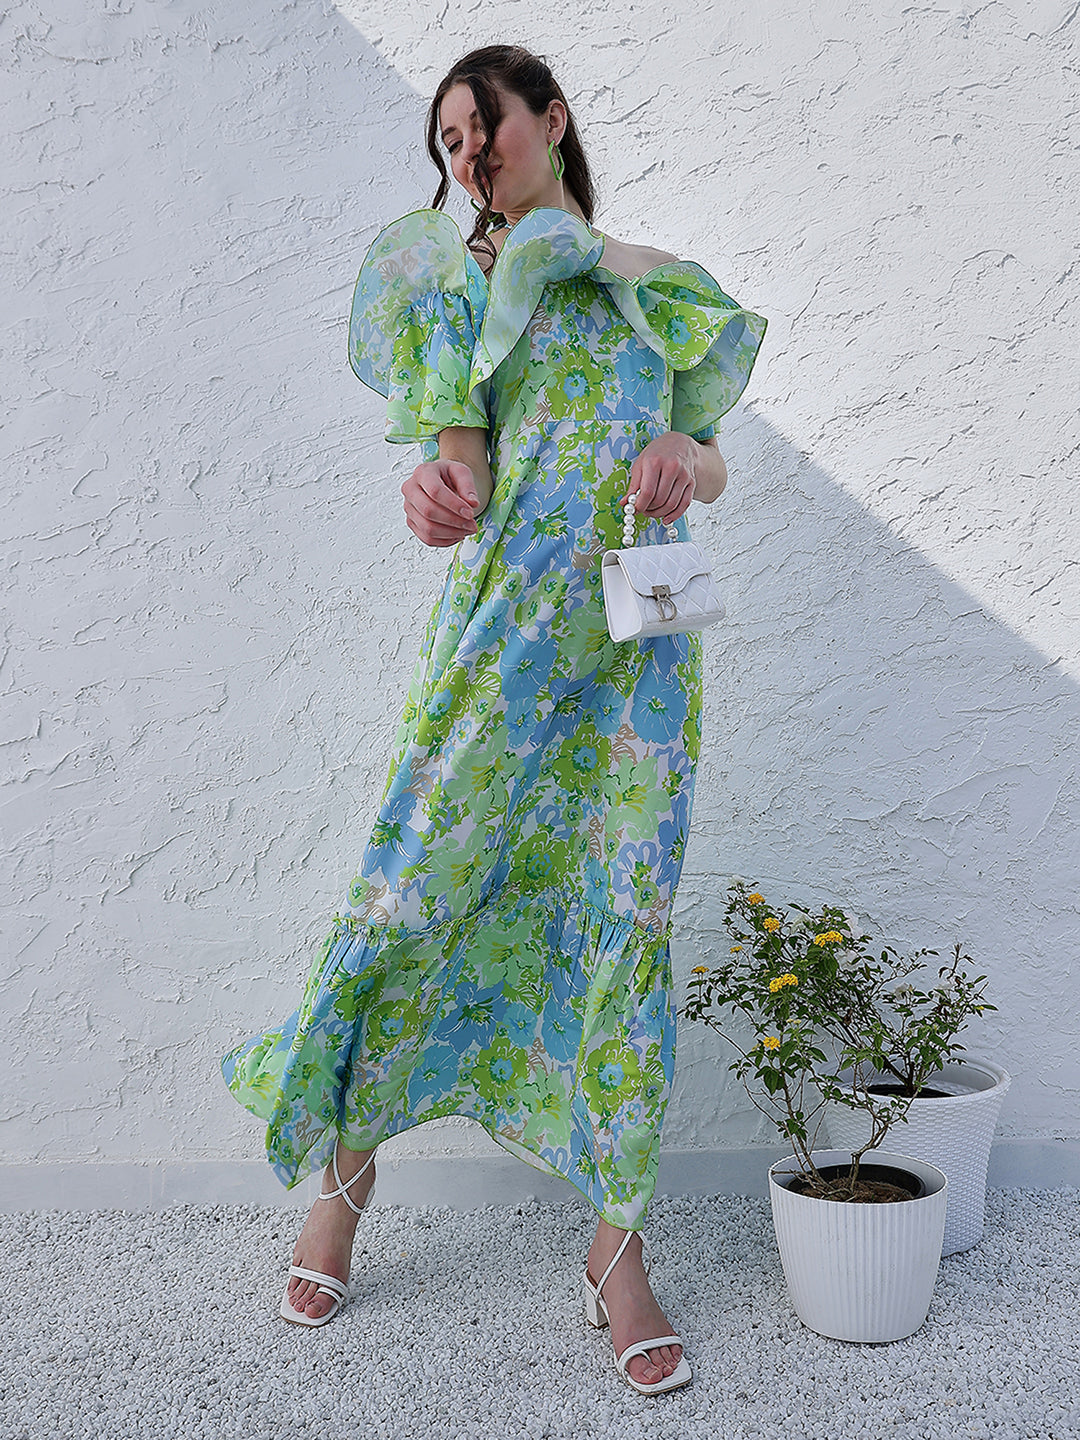 Athena Green Floral Printed Halter Neck Tiered Gathered Crepe Maxi Midi Dress